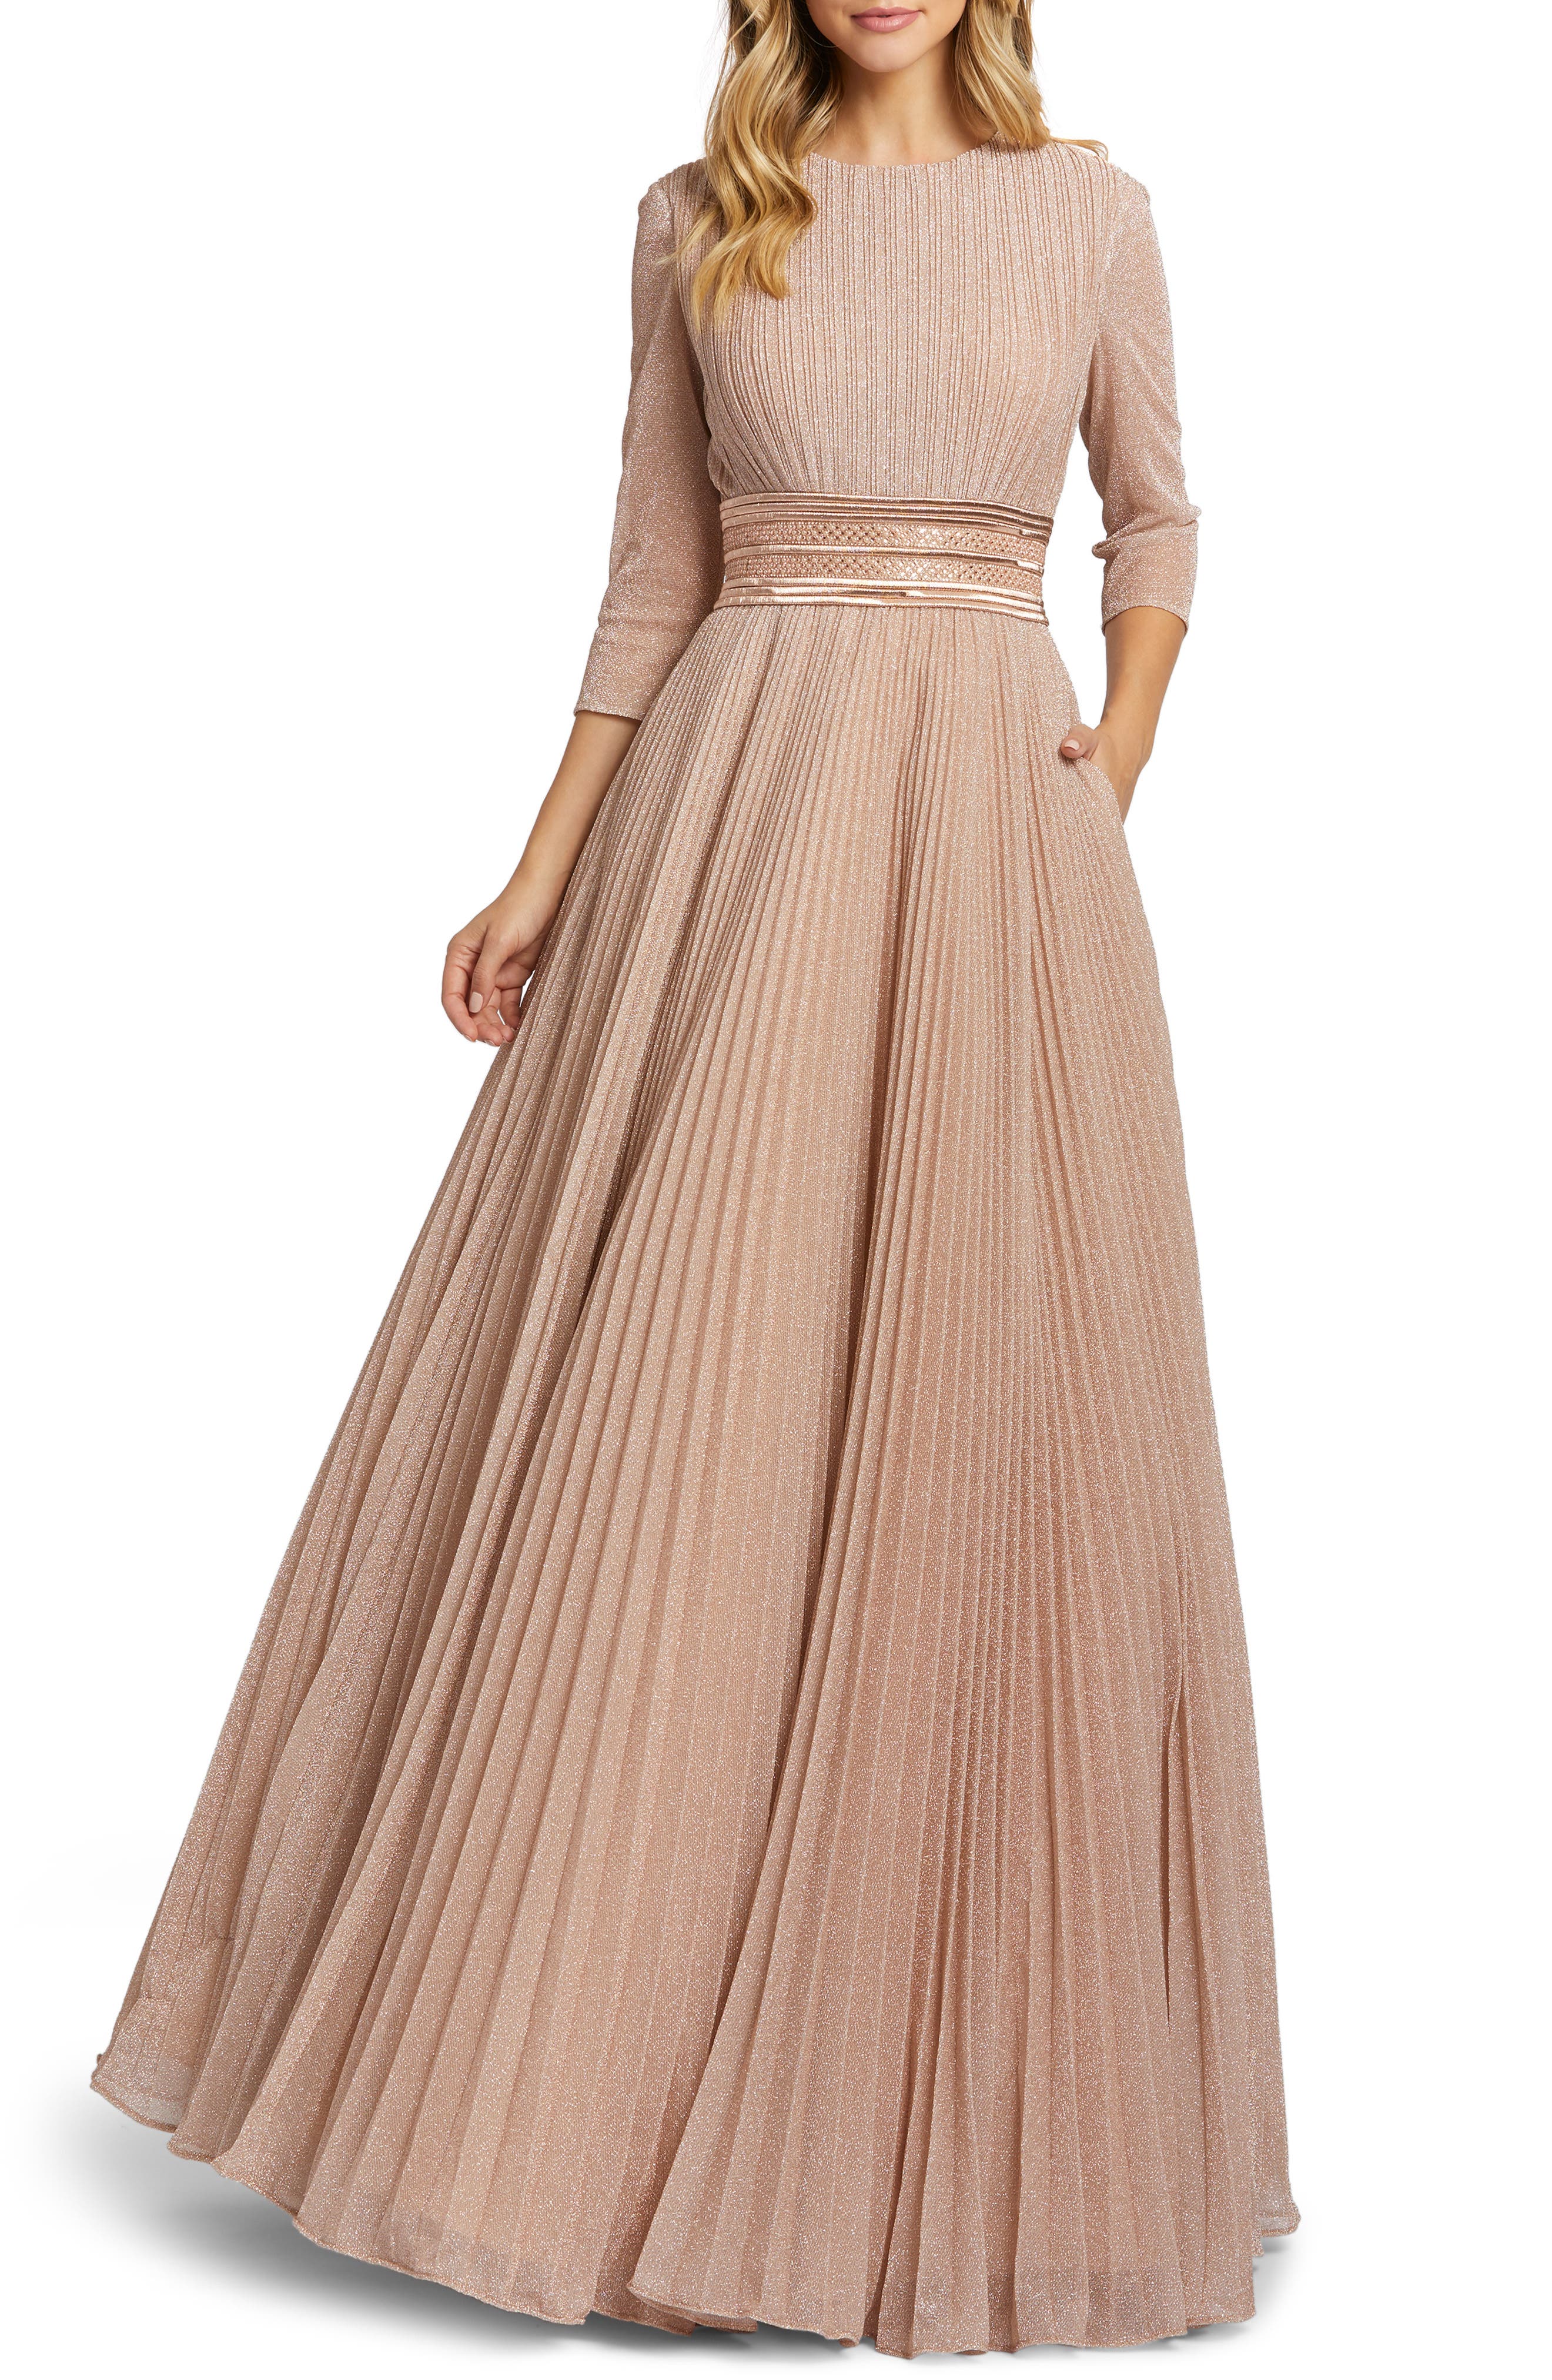 Beige Formal Dresses ☀ Evening Gowns ...